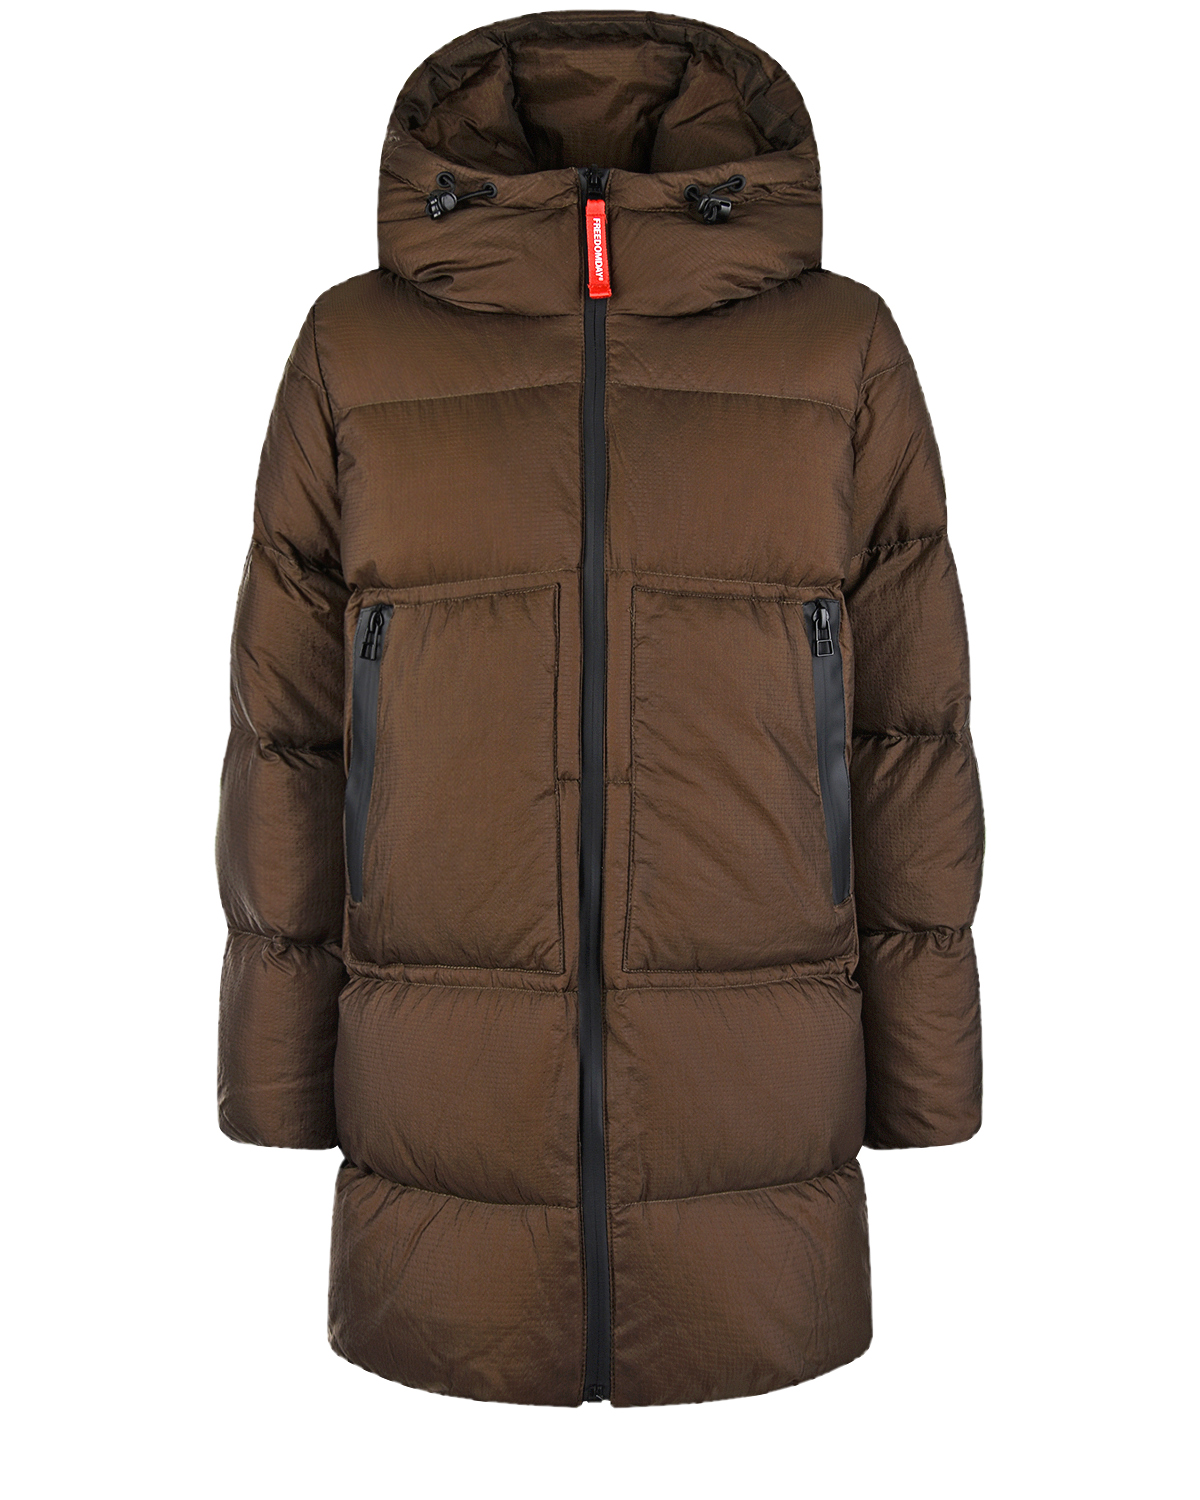 Зимняя куртка-парка цвета хаки Freedomday детская, размер 128 - фото 1